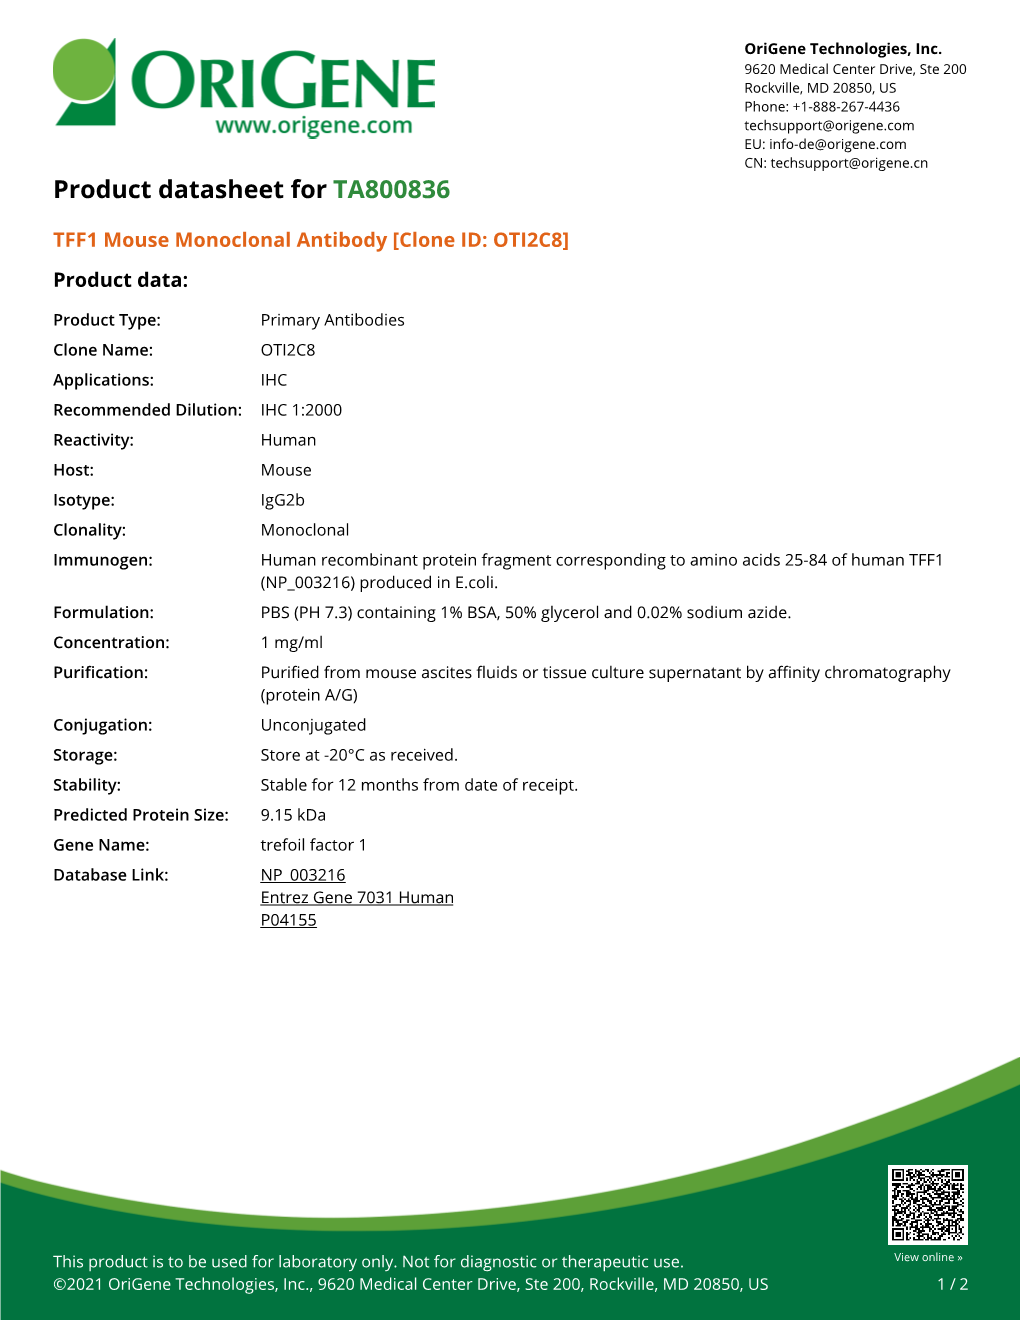 TFF1 Mouse Monoclonal Antibody [Clone ID: OTI2C8] Product Data